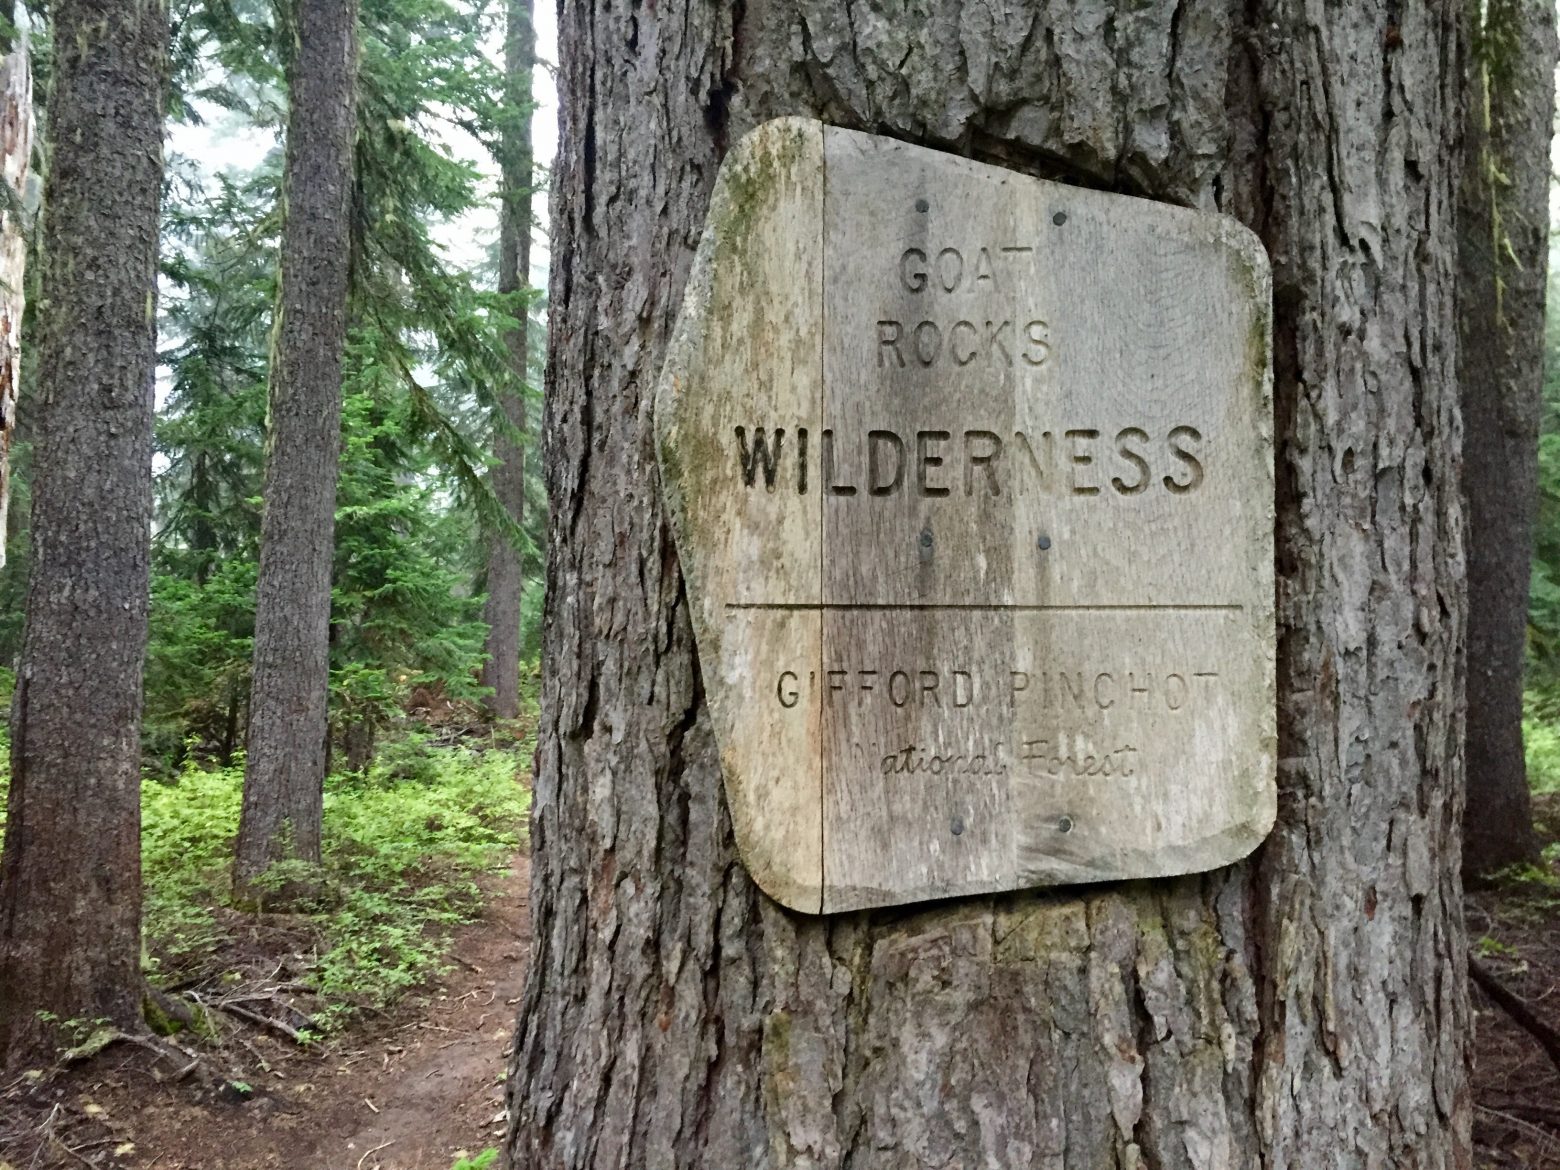 Sign marking boundary of Goat Rocks Wilderness area